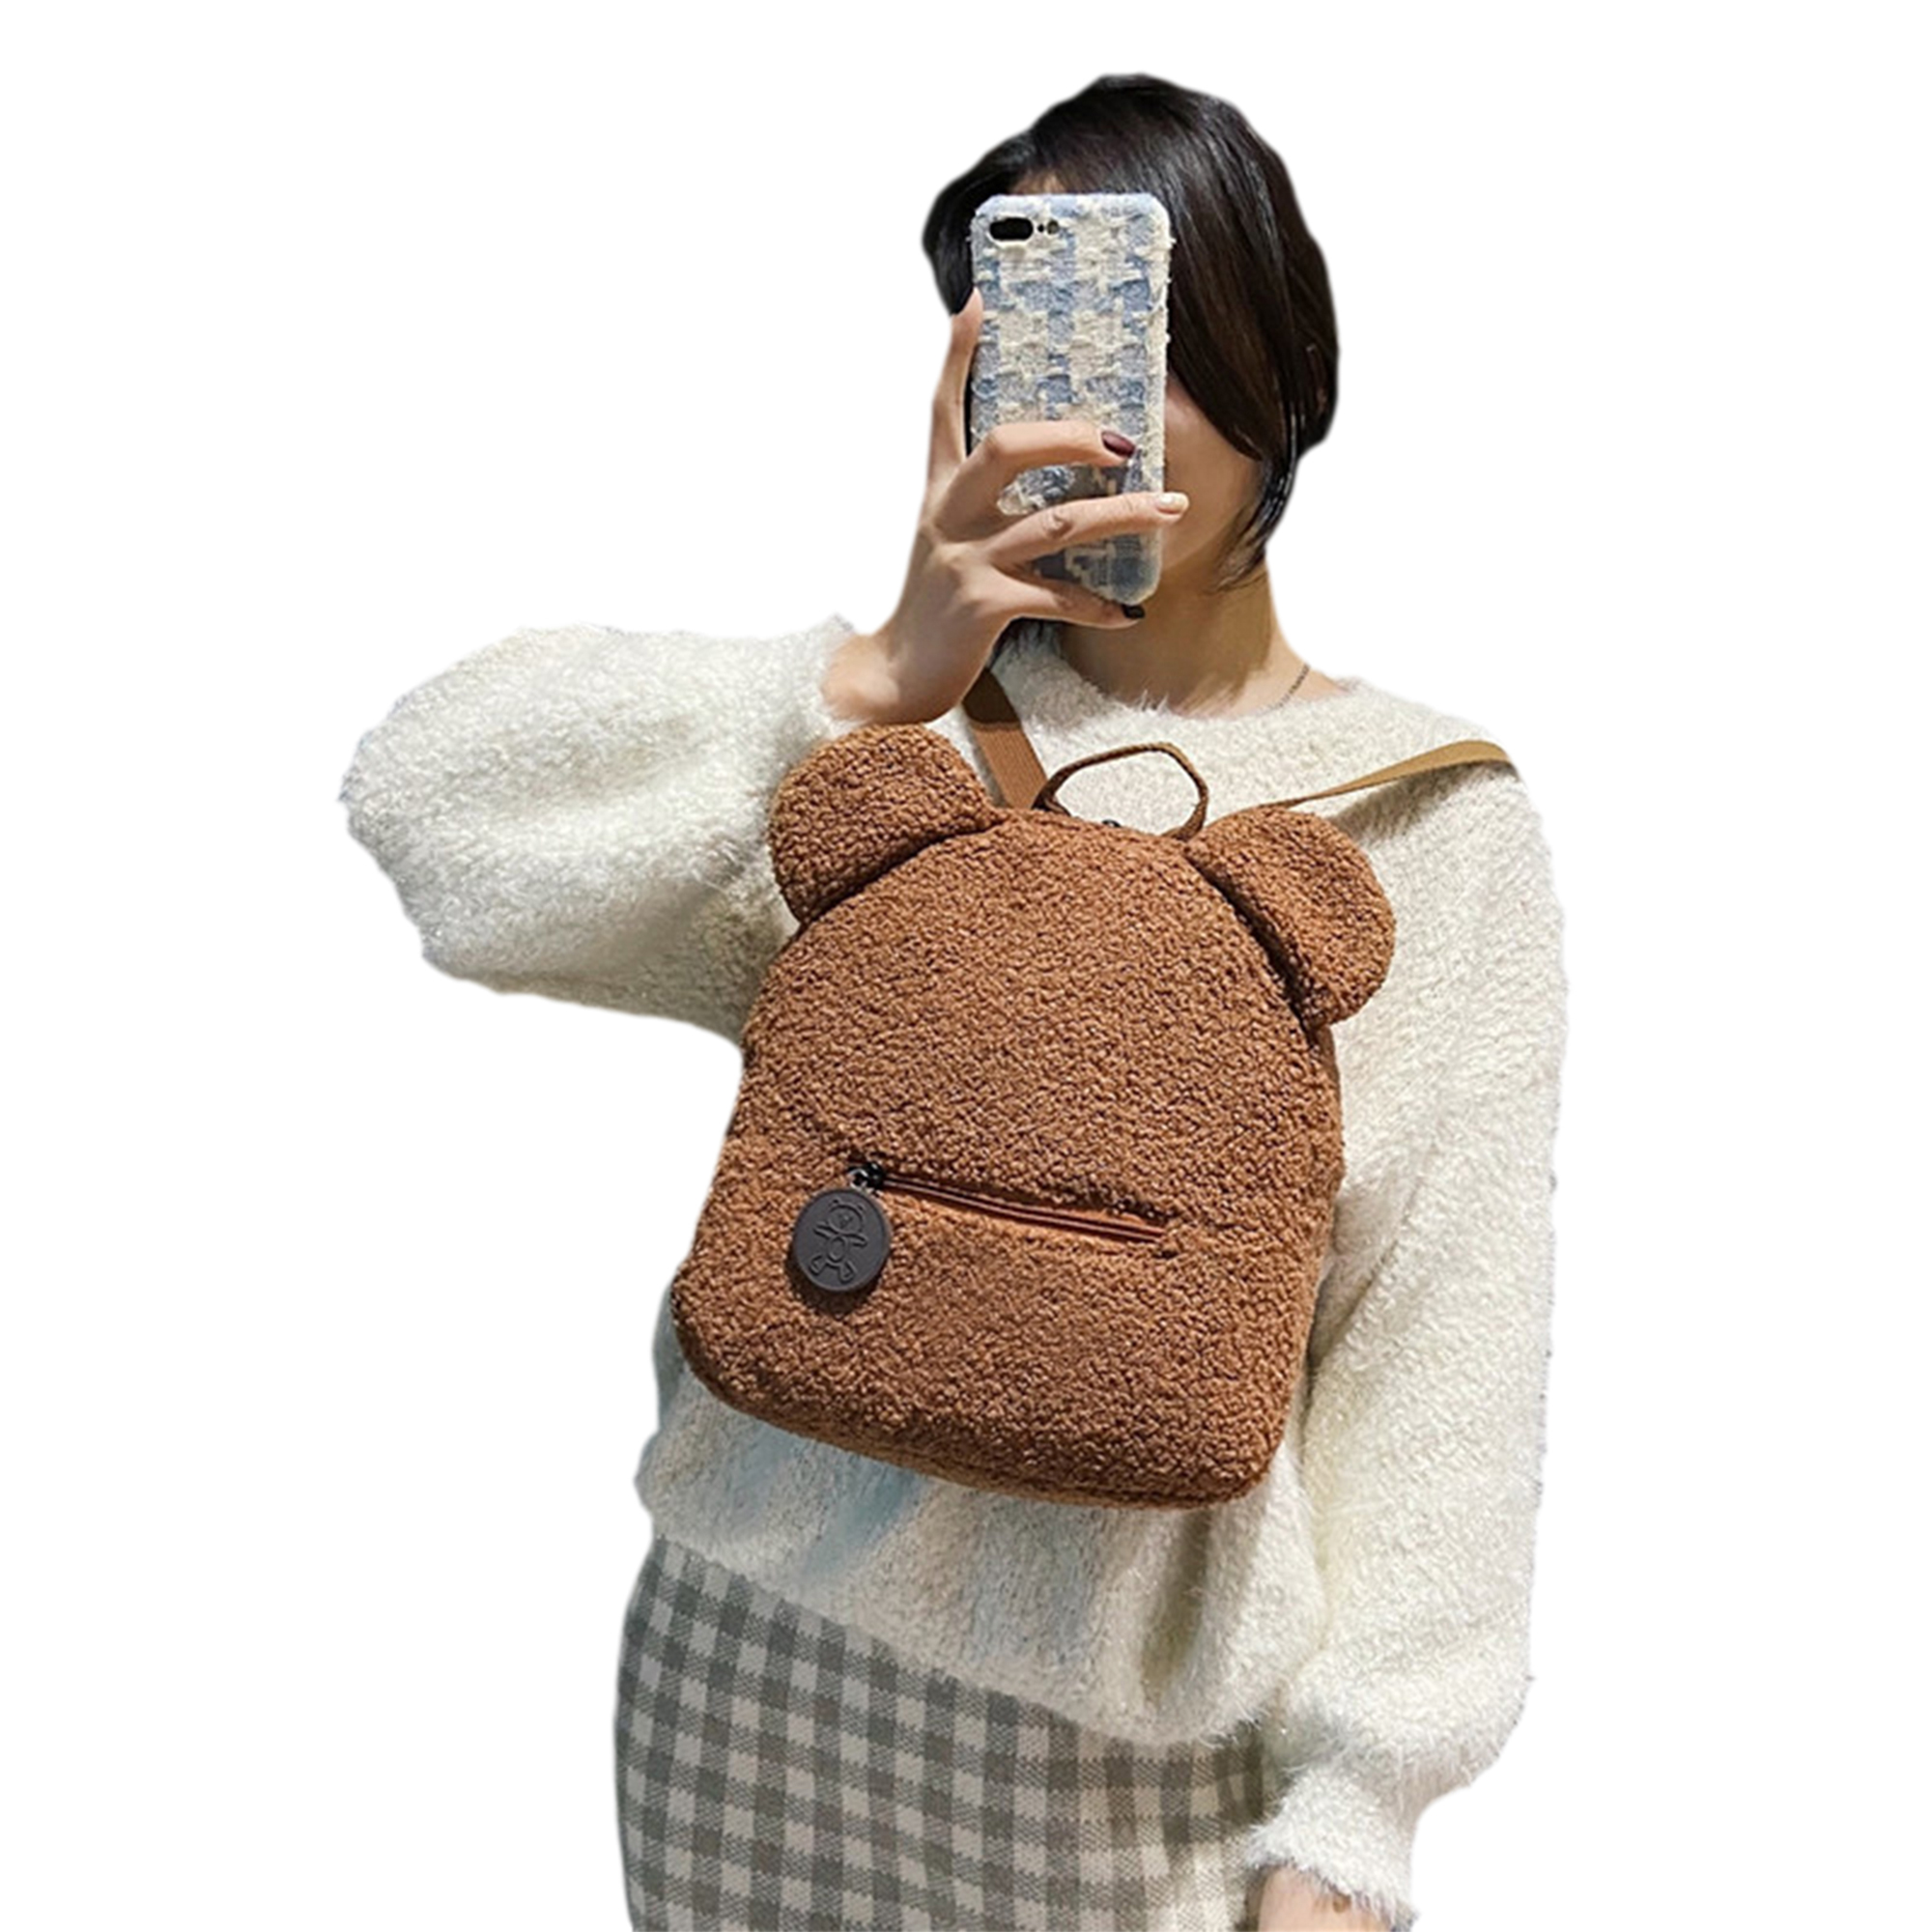 Puloru Women Girls Cute Bear Ear Fleece Solid Color Small Backpack Daypack - image 5 of 5